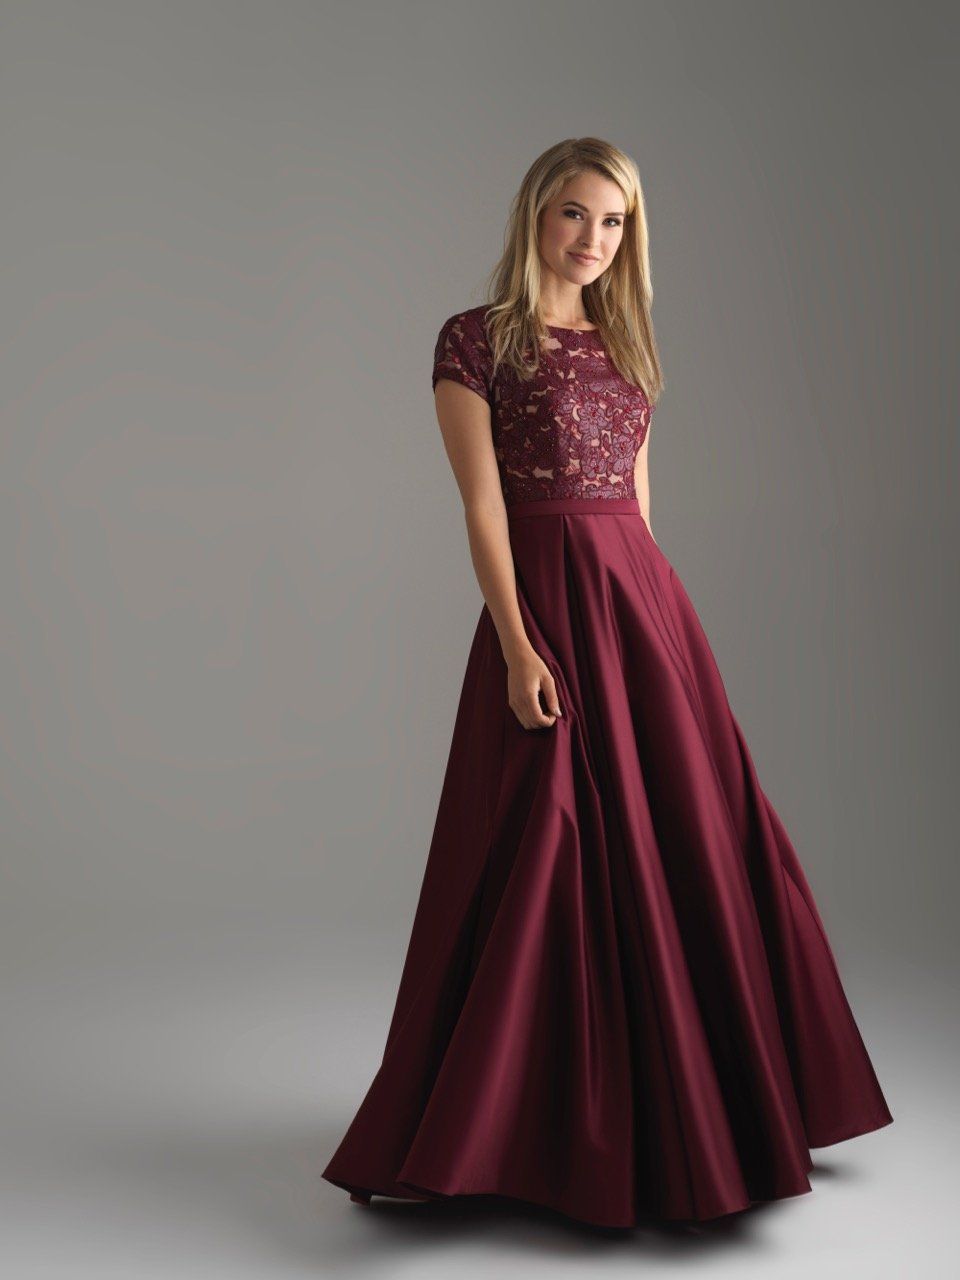 MJ 18-804 Modest Prom Dress - MJ 18-804 Modest Prom Dress -   17 beauty Dresses modest ideas